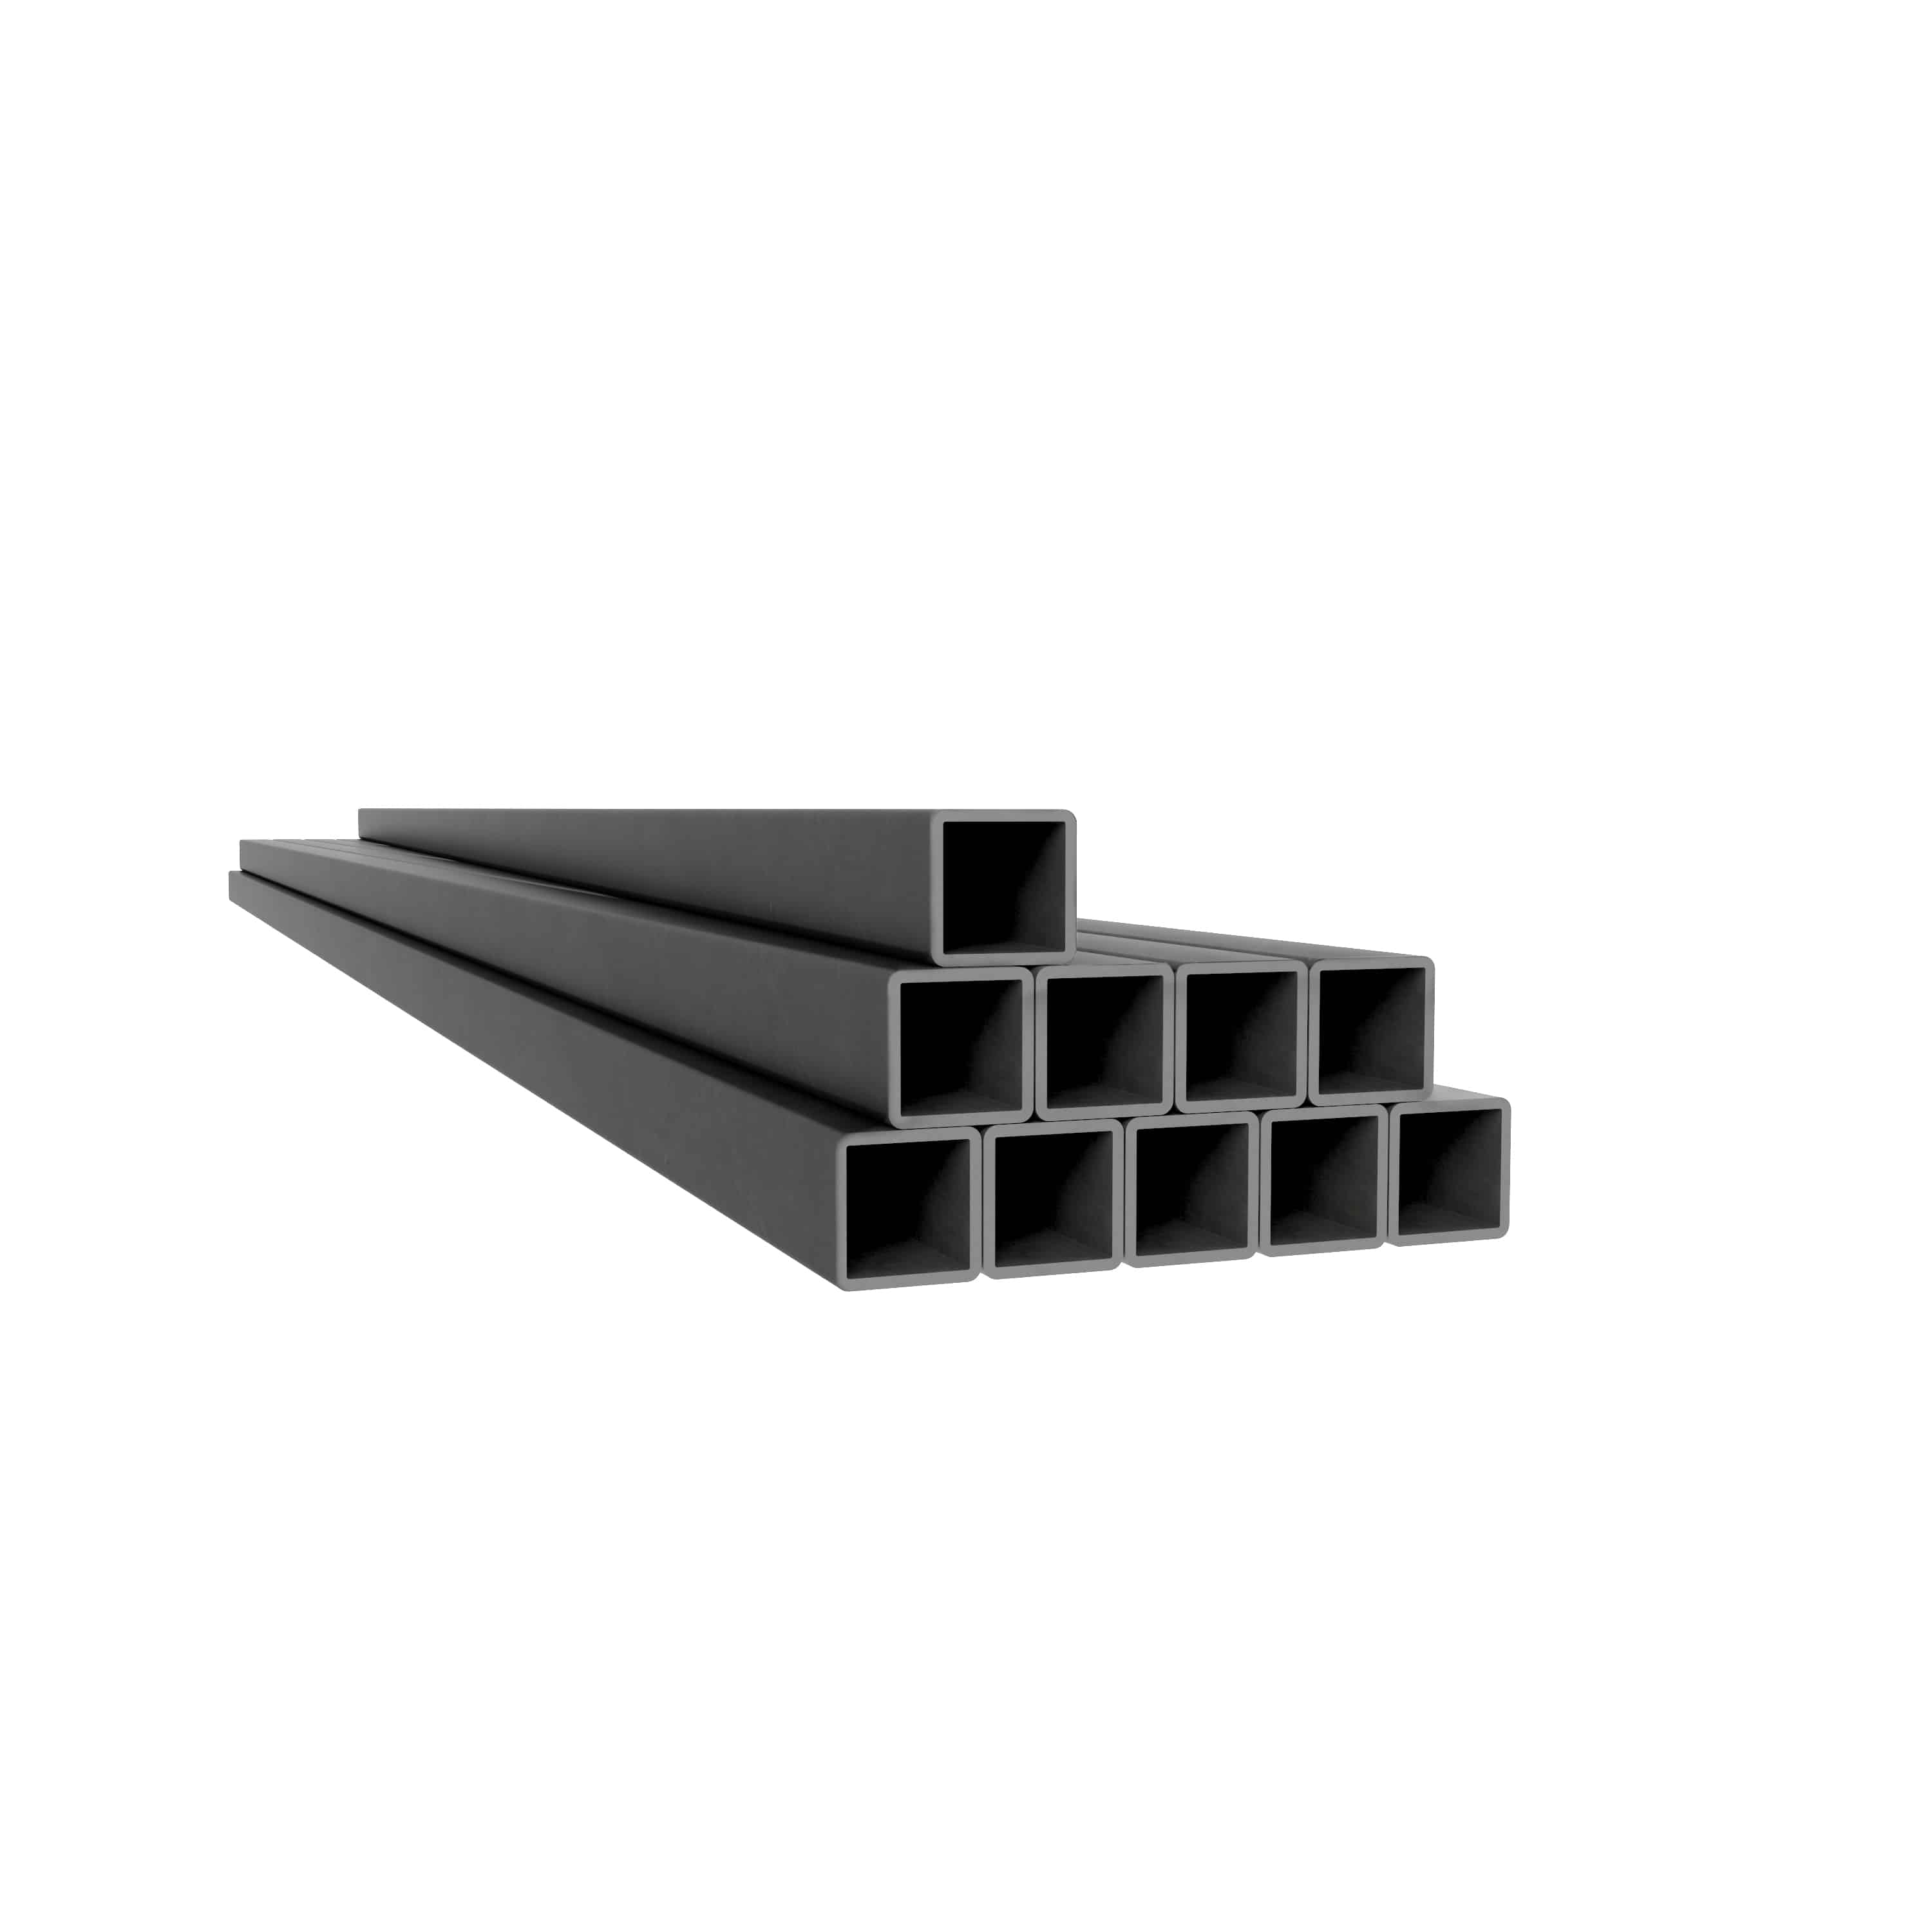 Square Pipe - Square pipe 90 x 90 x 4 mm S235-12LM, https:maxbau.ro